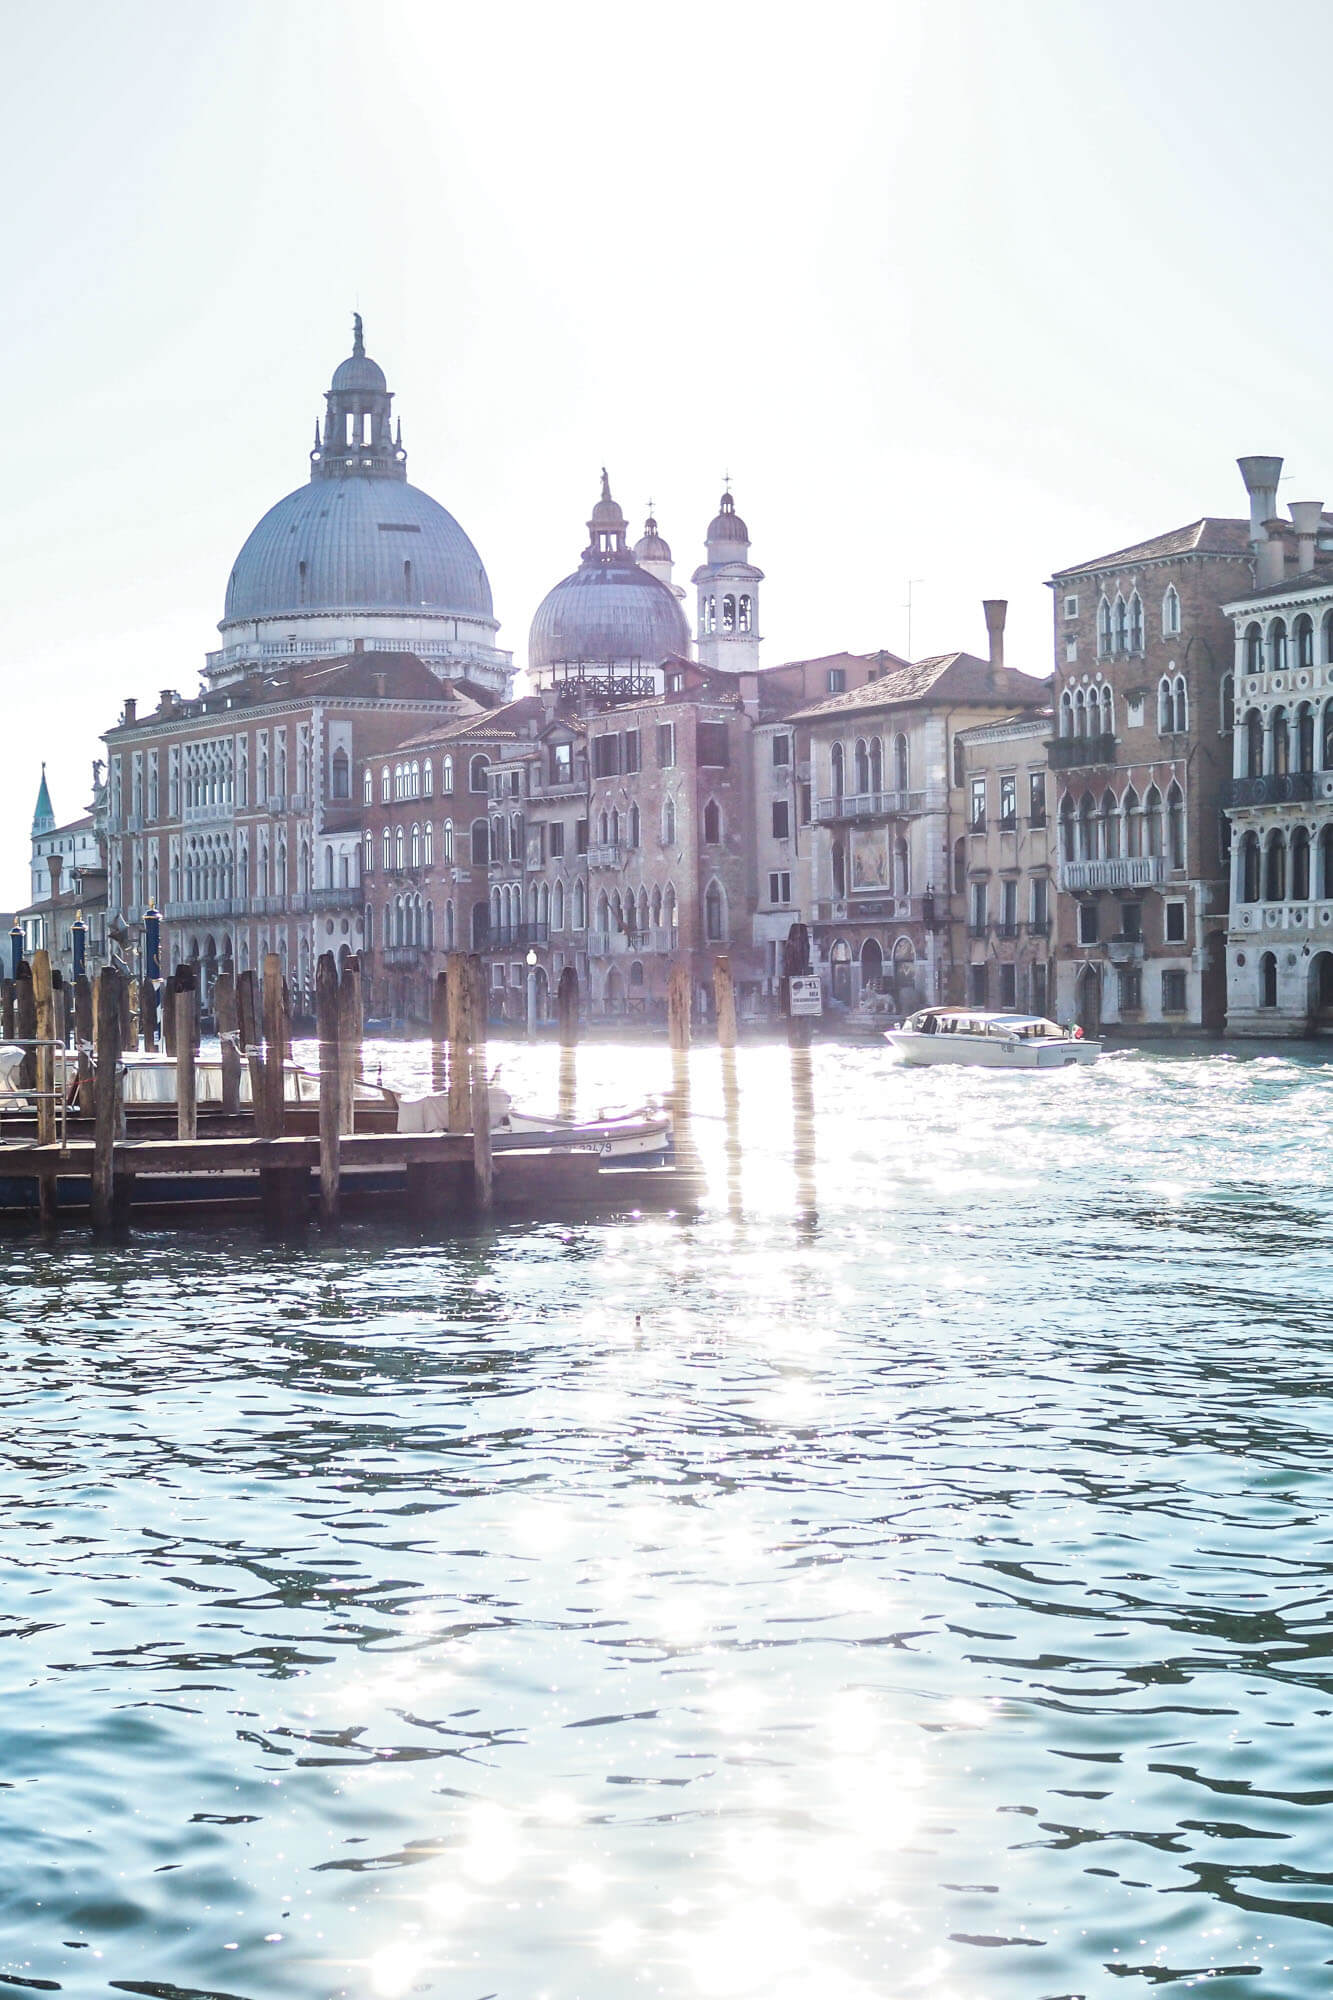 Canal, Venice - Travel photographer